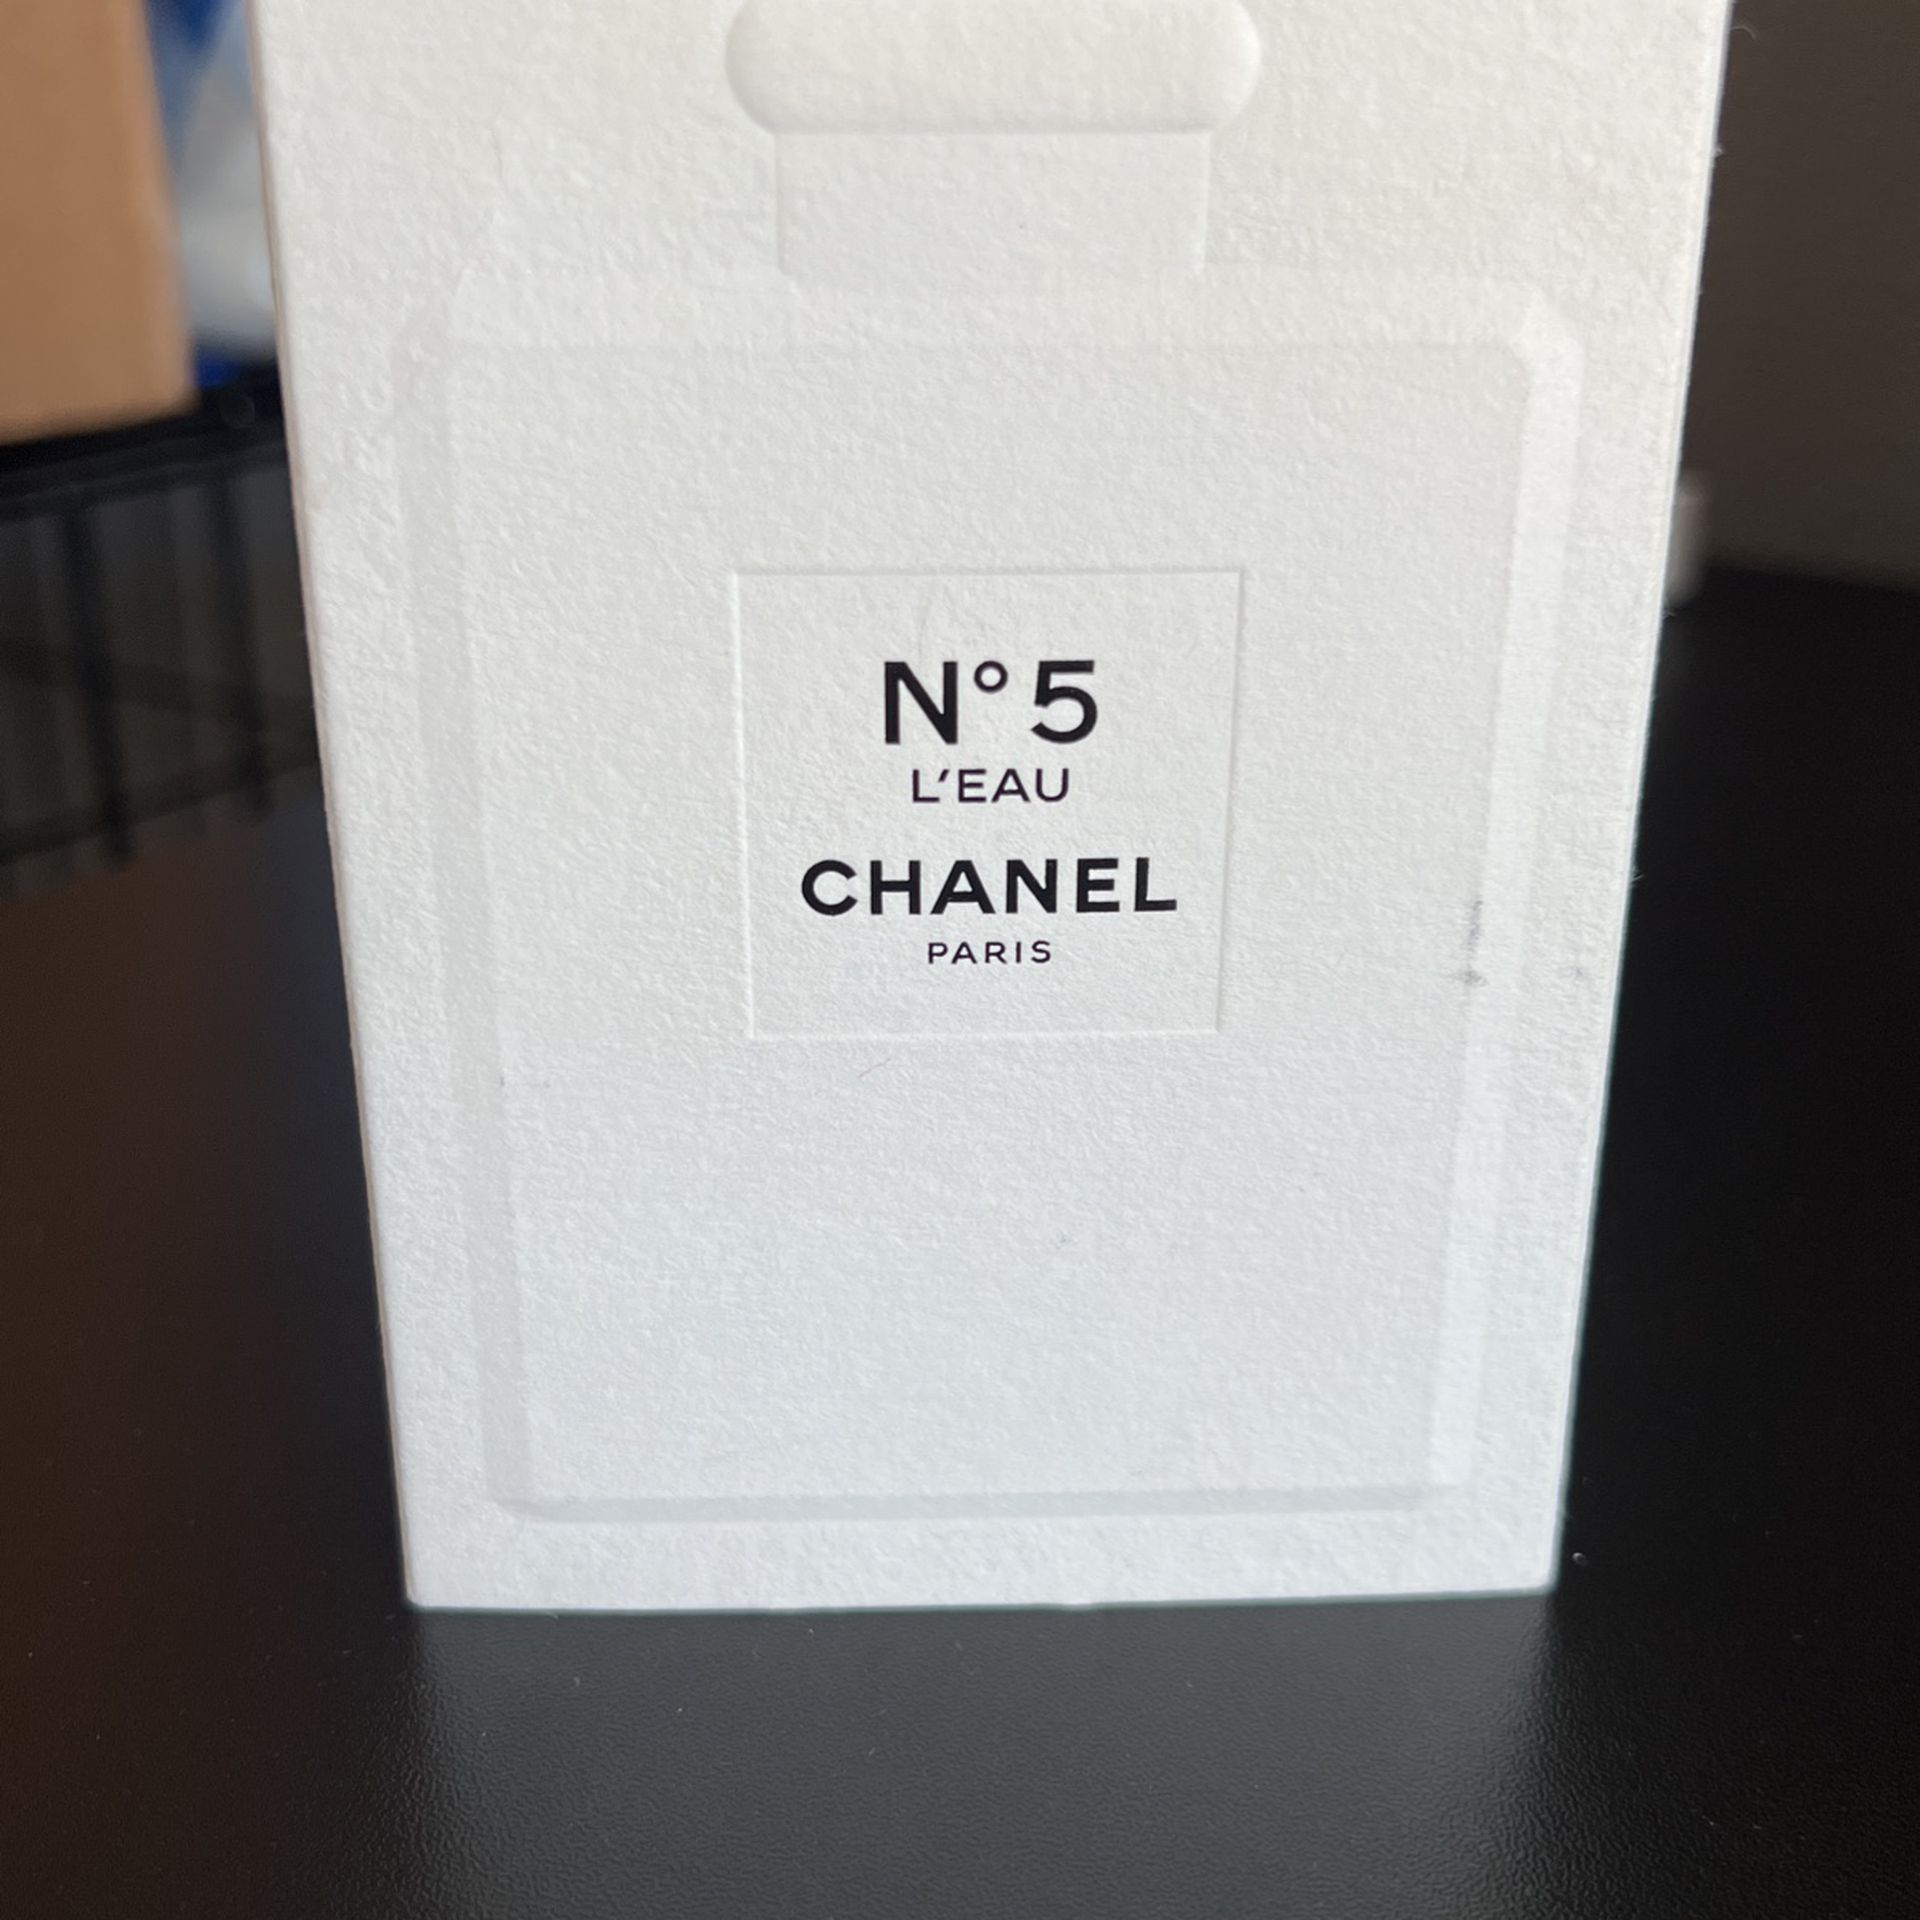 Chanel Paris Perfume 